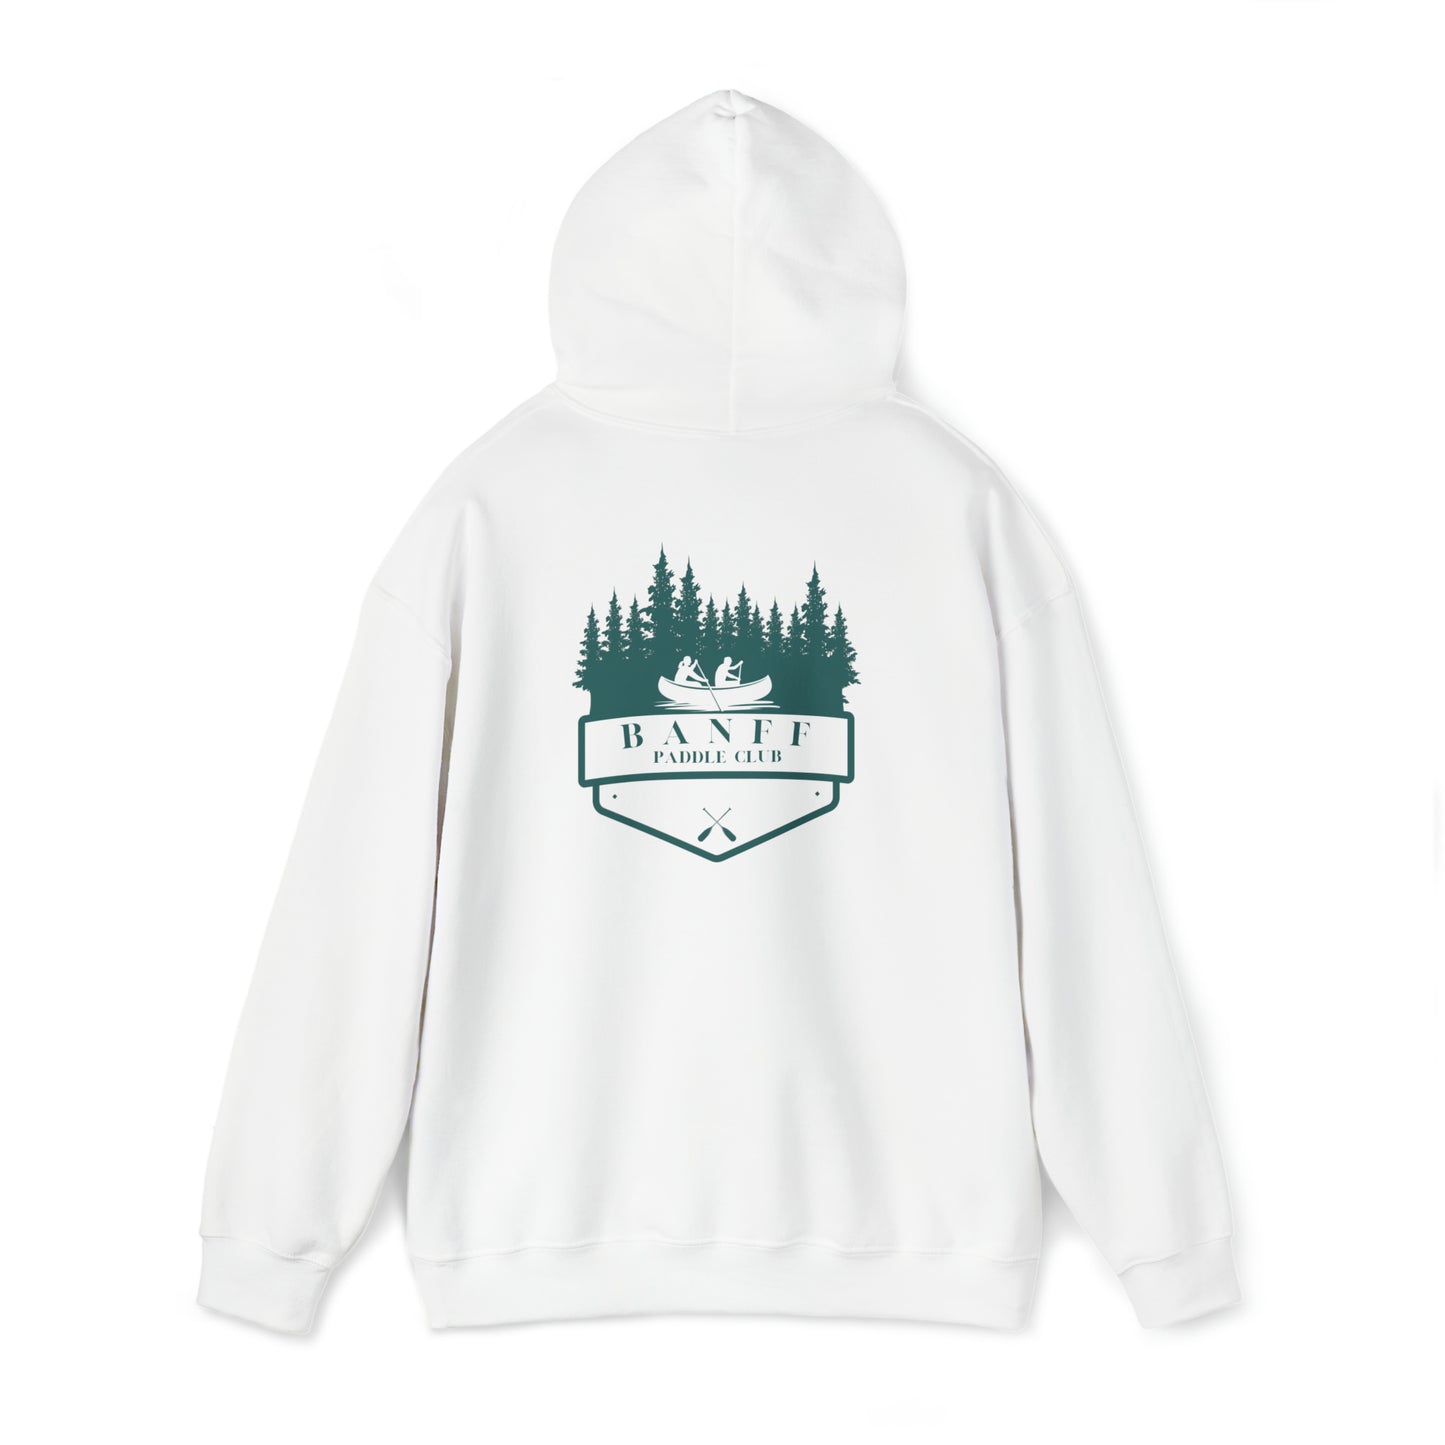 Banff Paddle Club - Unisex Heavy Blend™ Hooded Sweatshirt